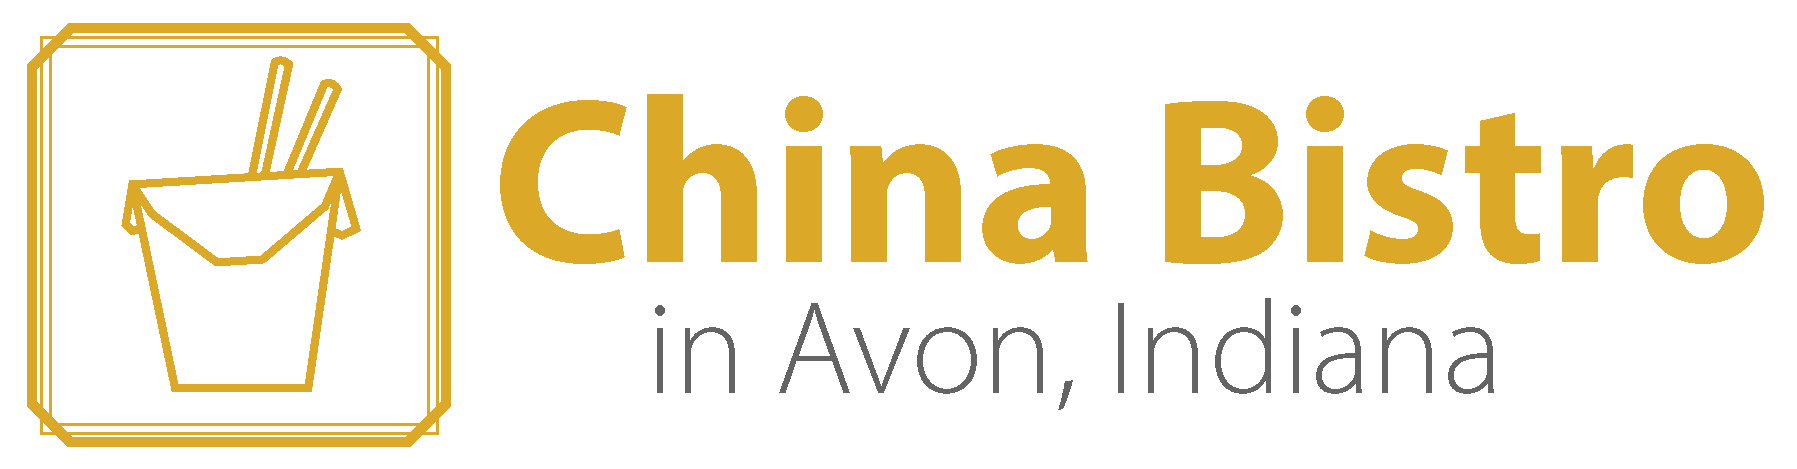 China Bistro in Avon